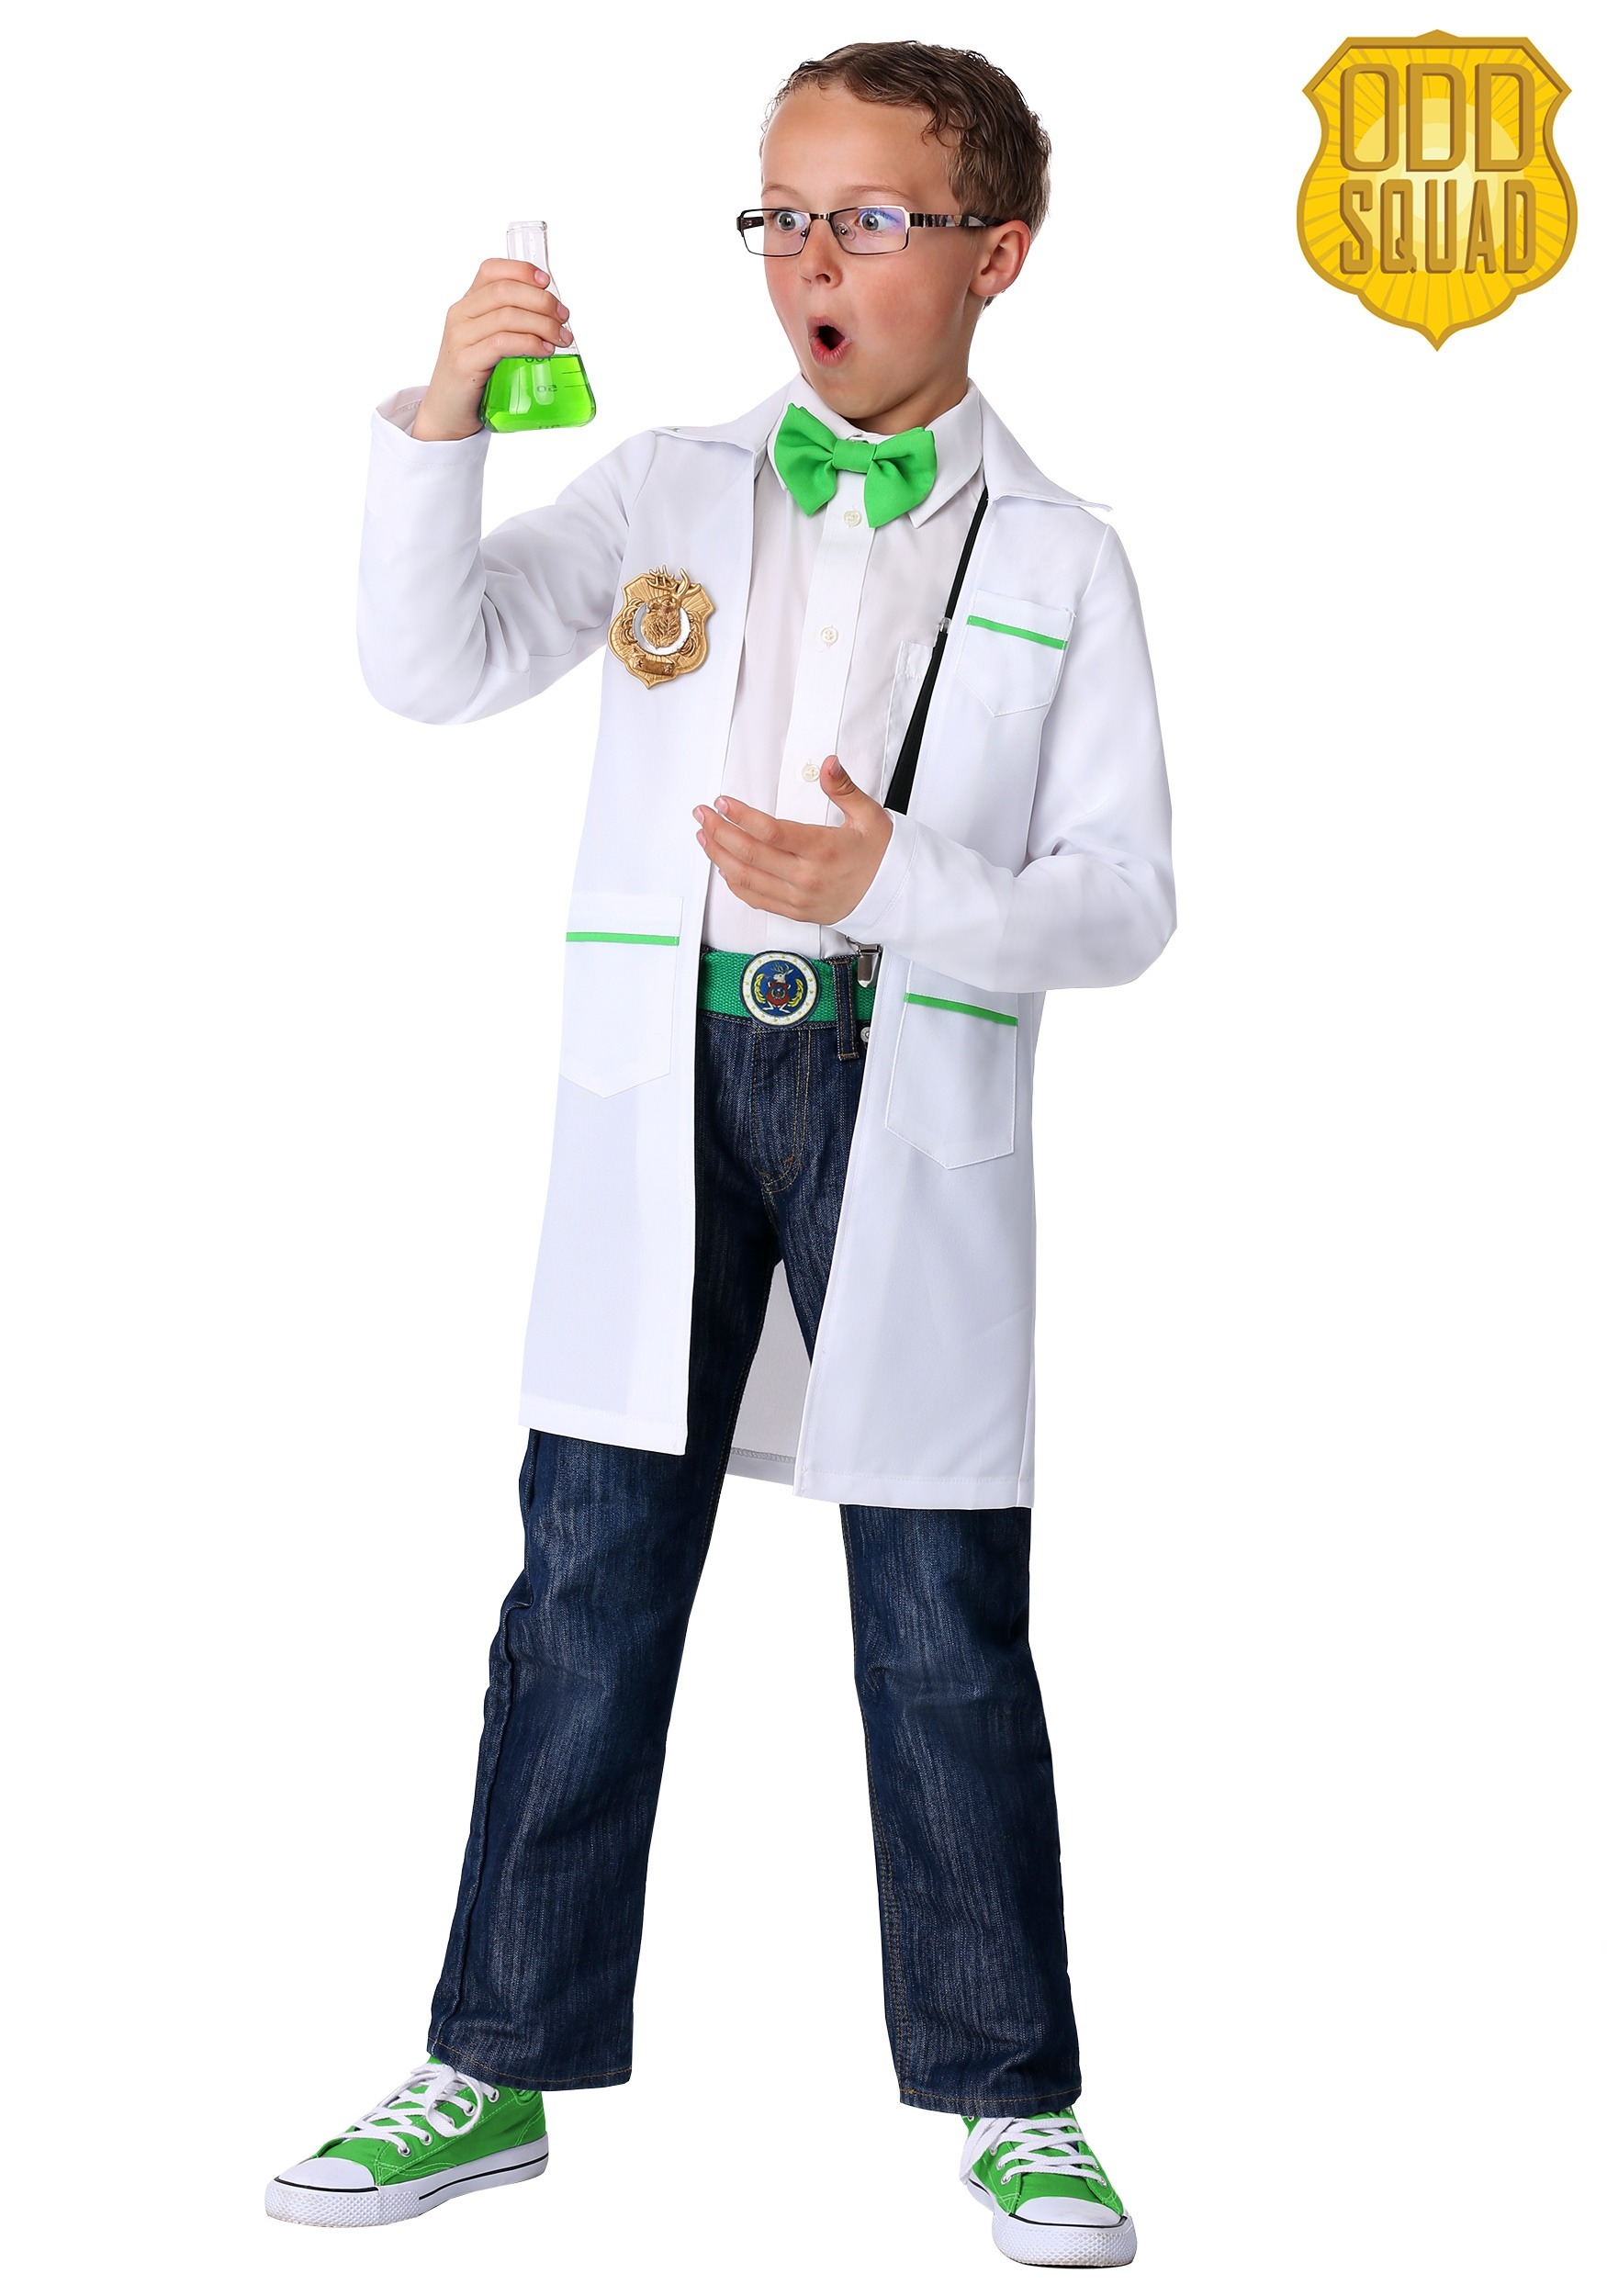 ODD SQUAD Child Scientist Costume